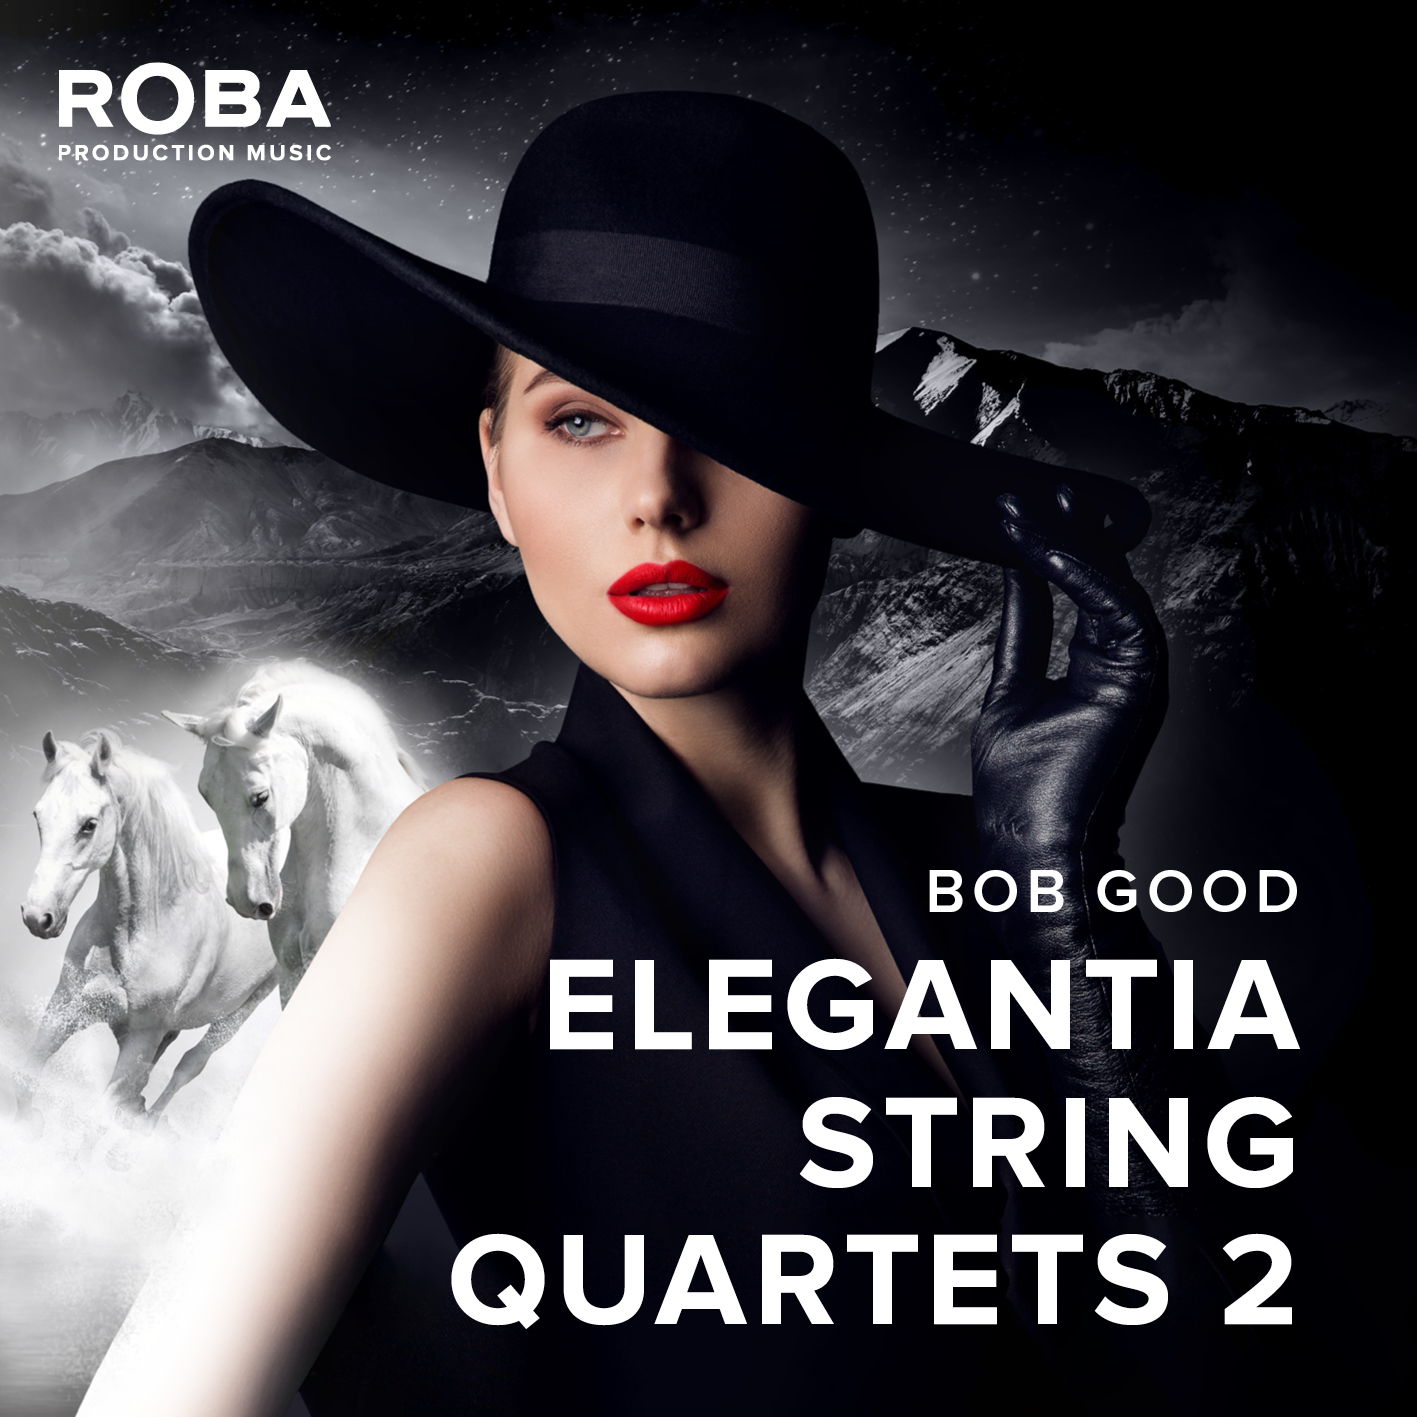 Elegantia String Quartets 2